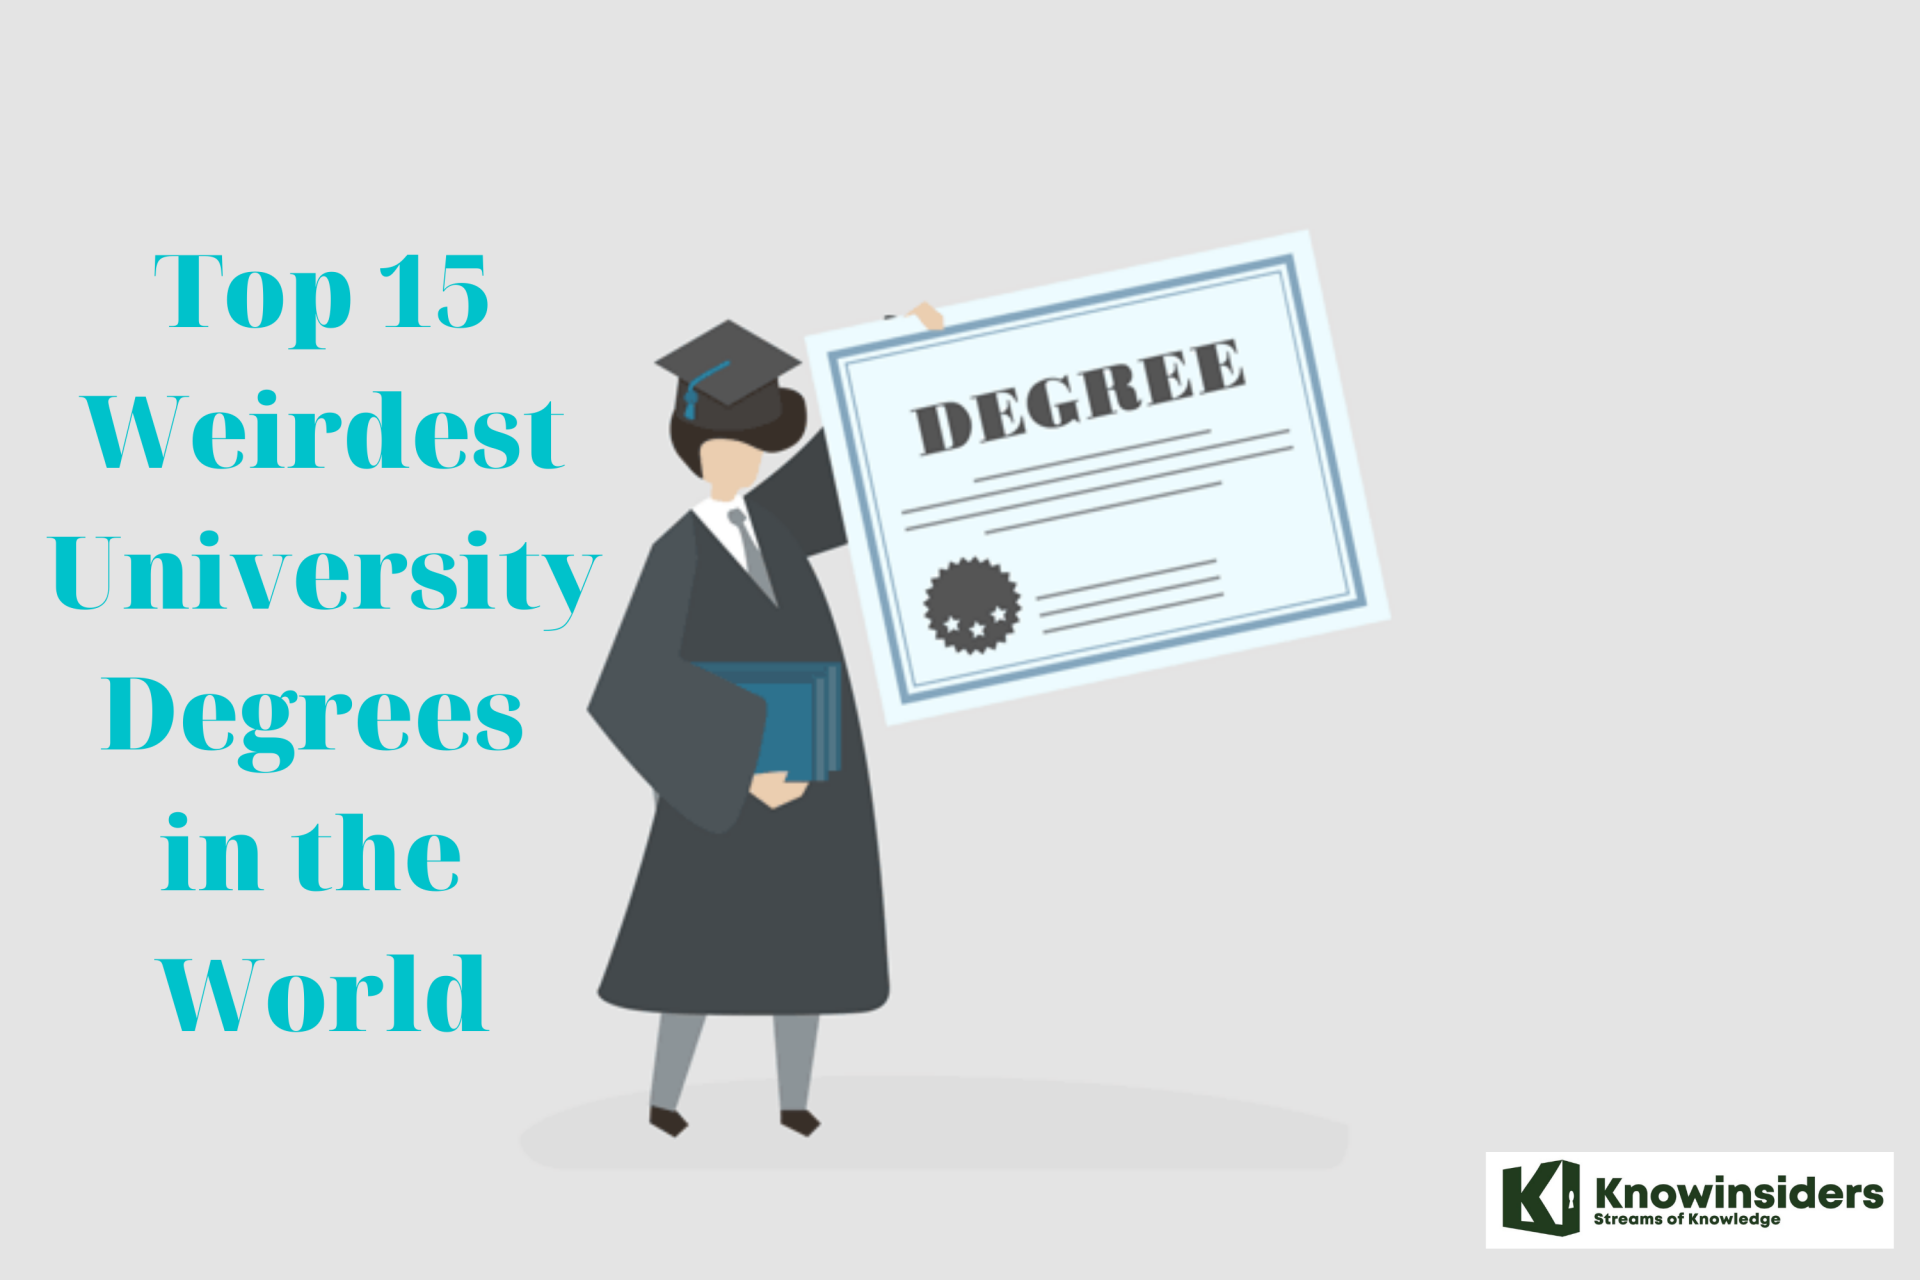 Top 15 Weirdest University Degrees in the World